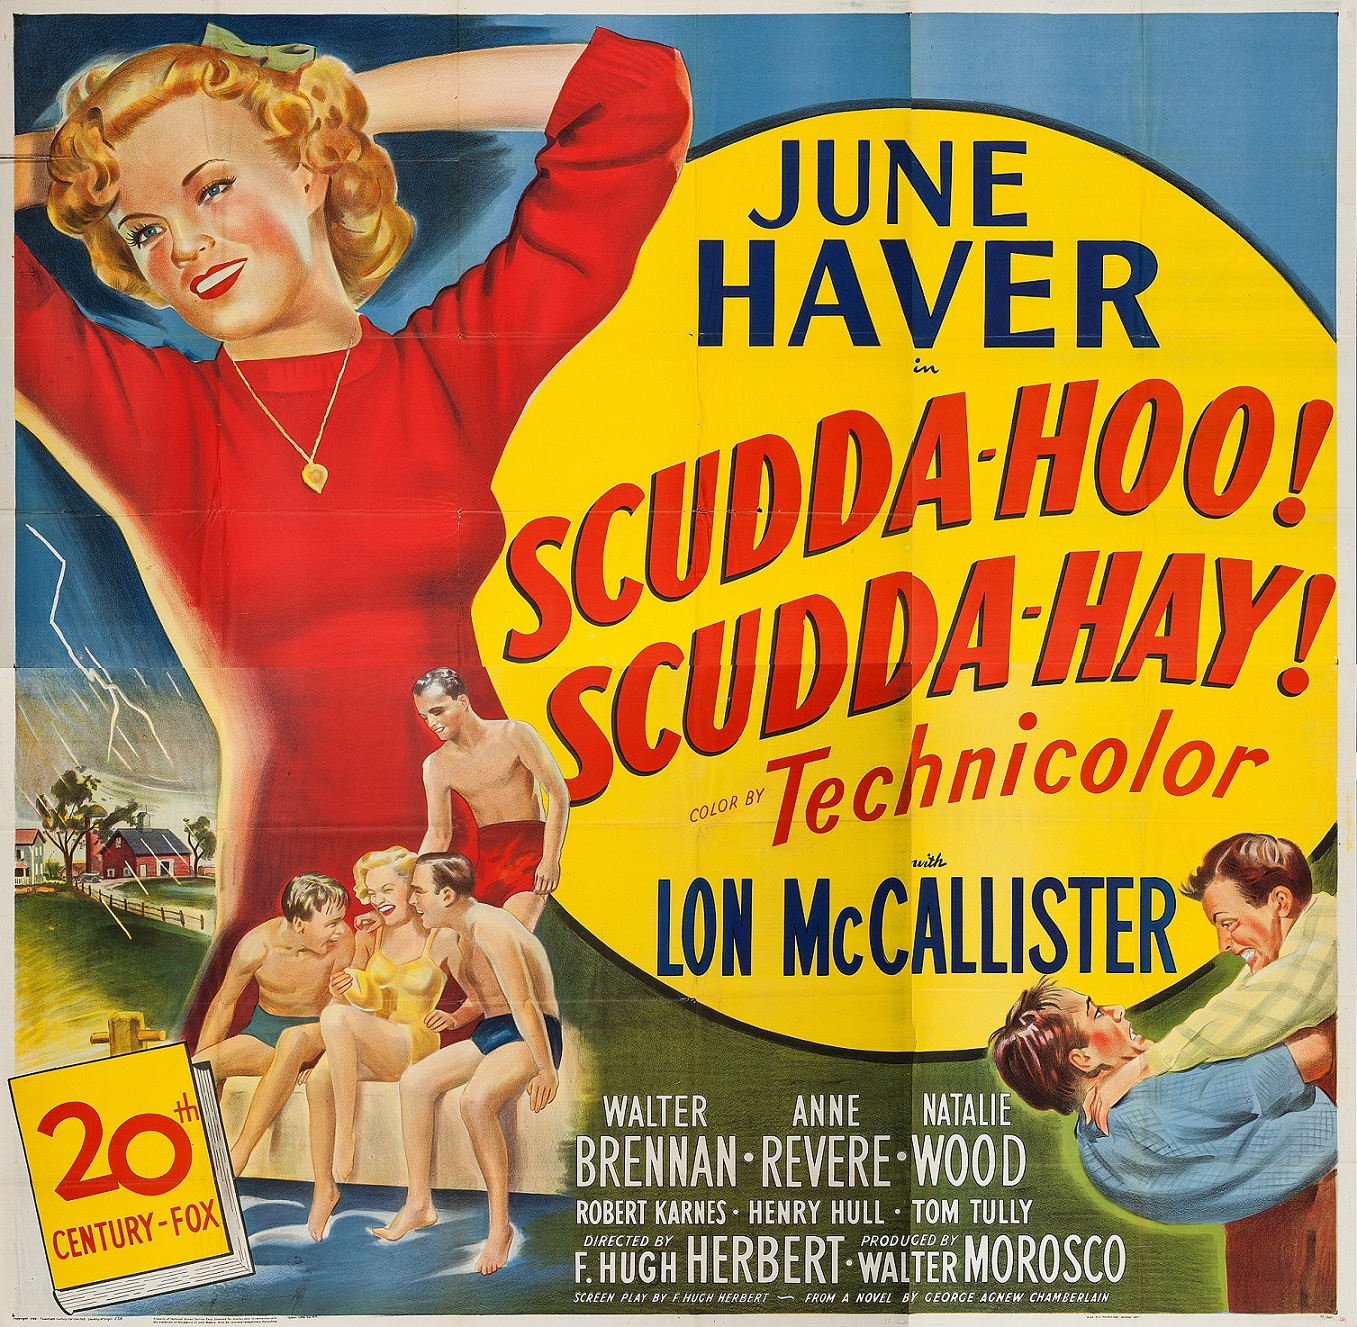 SCUDDA HOO SCUDDA HAY (1948) WEB SITE